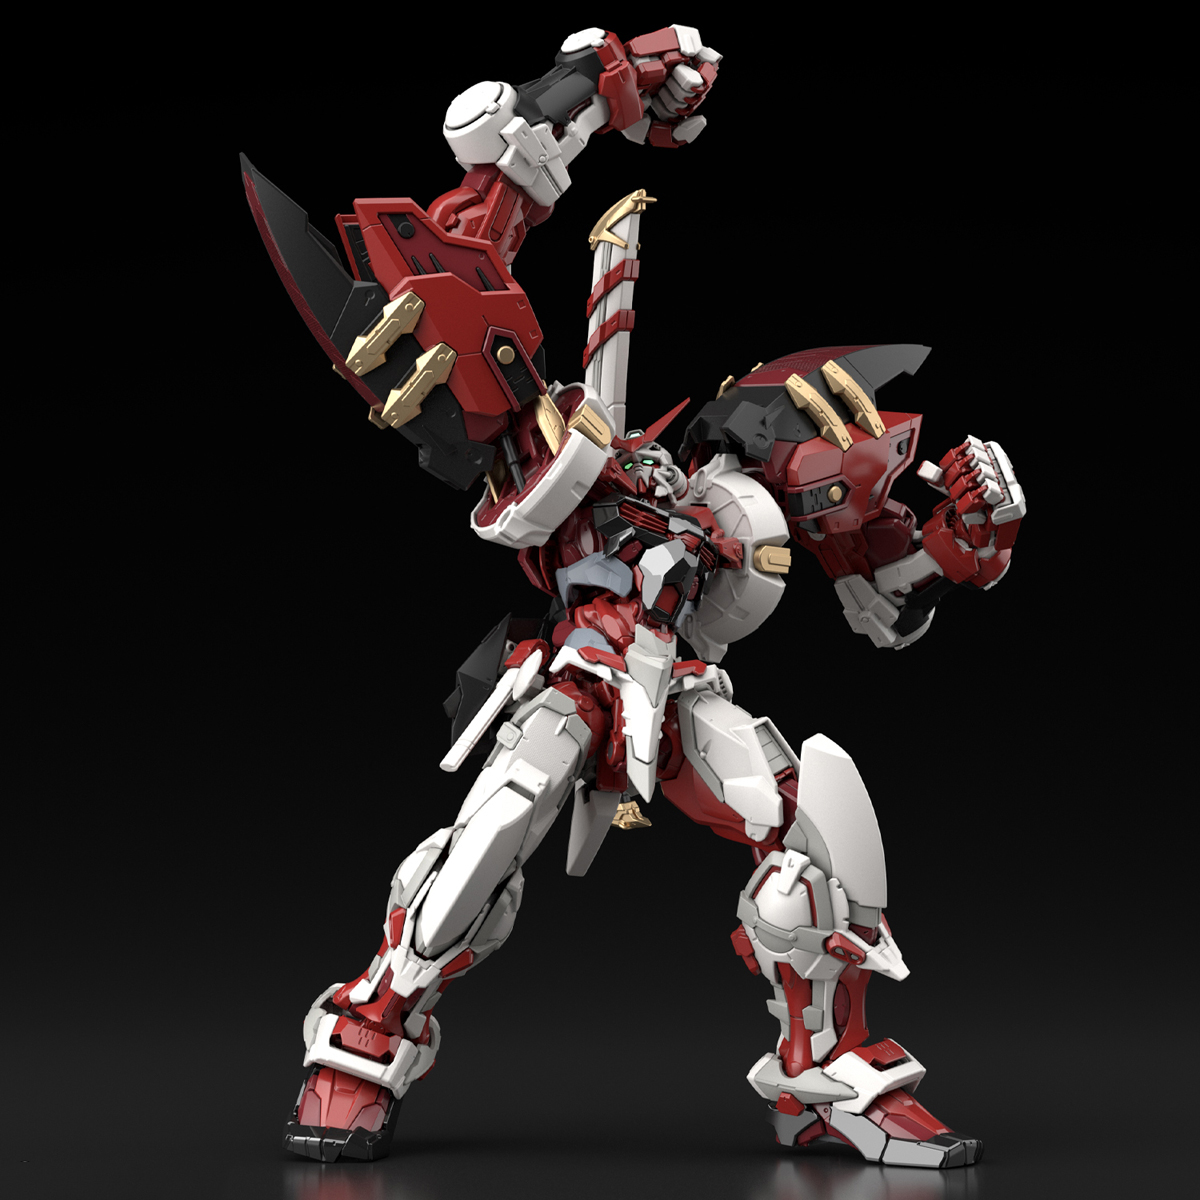 Повер ред. Gundam Astray Red frame. Hirm 1 100 Astray Gundam синего цвета. Пауэр фреймы. Astray Red frame Dragon.